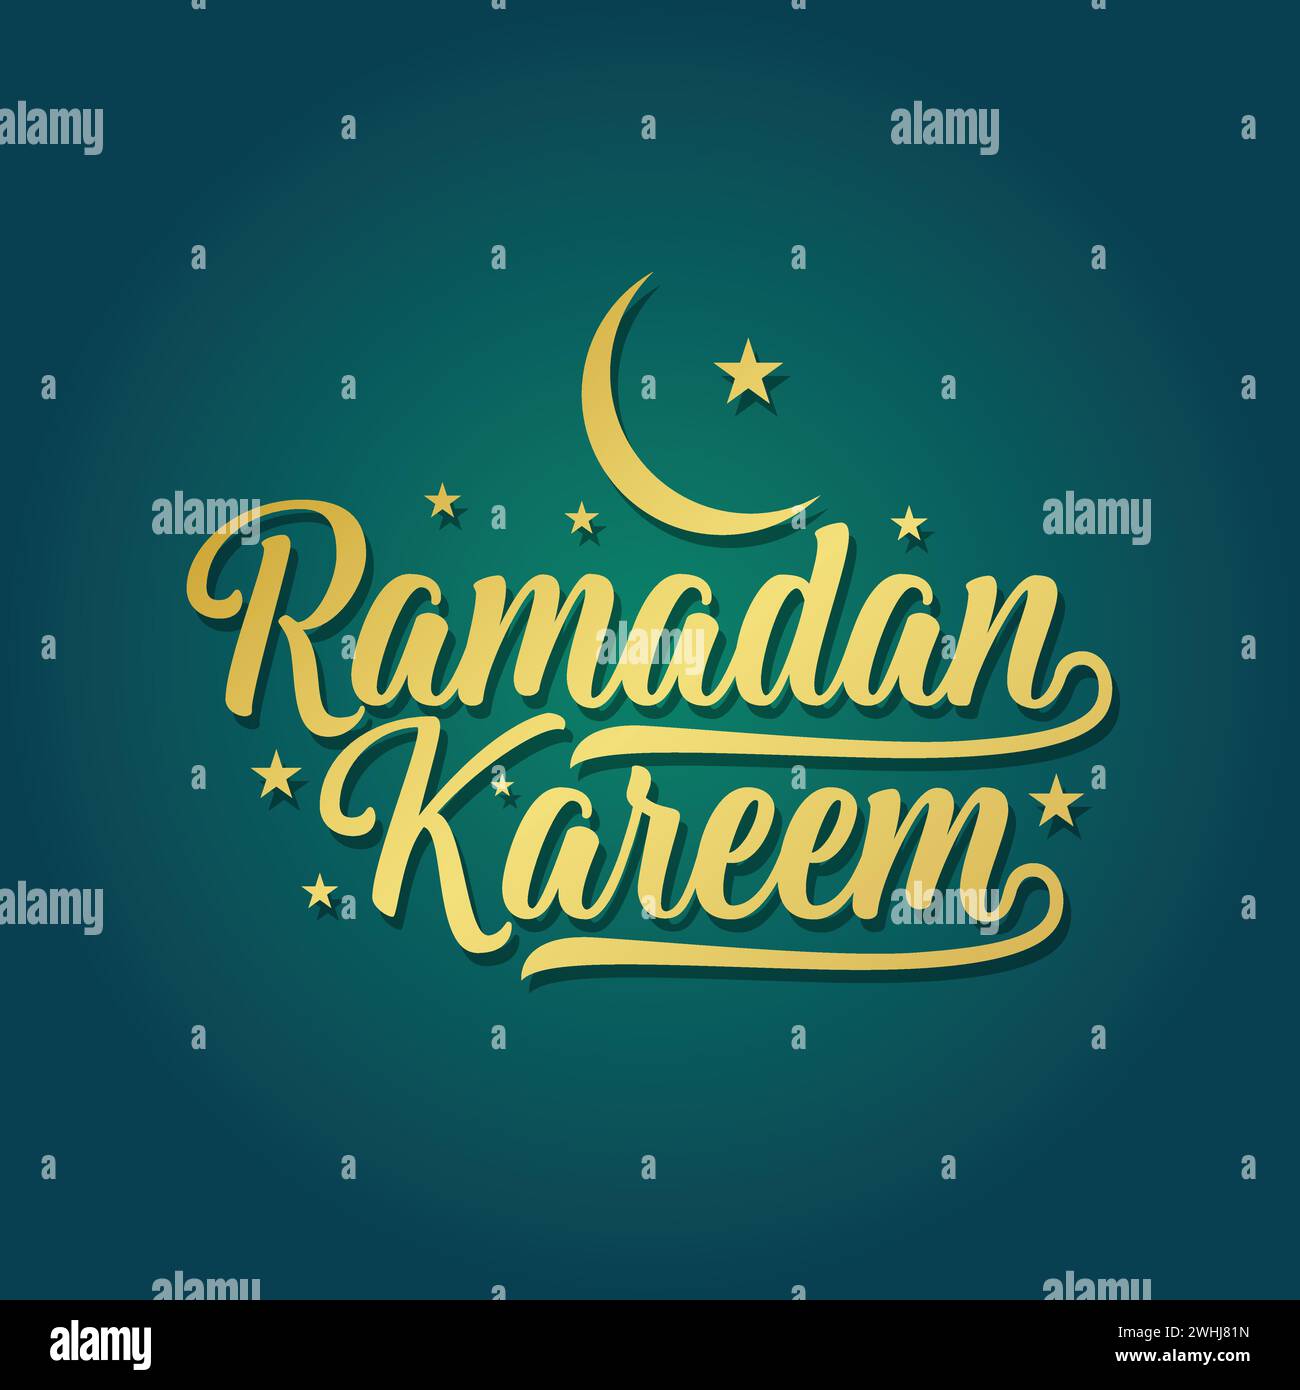 Ramadan Kareem carte de voeux vecteur lettrage illustration. Ramadan aussi appelé Ramazan, Ramzan, Ramadhan est musulman dans le monde entier un mois de jeûne Illustration de Vecteur